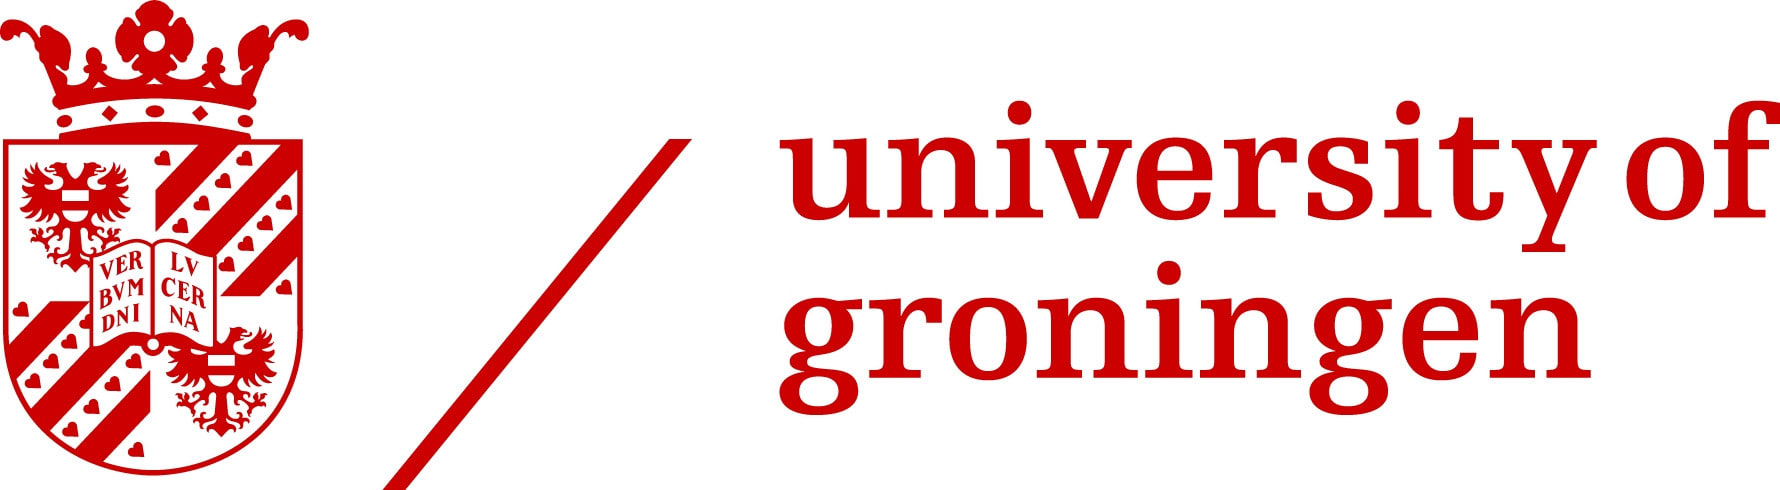 University of Groningen in Netherlands - Masters of Laws